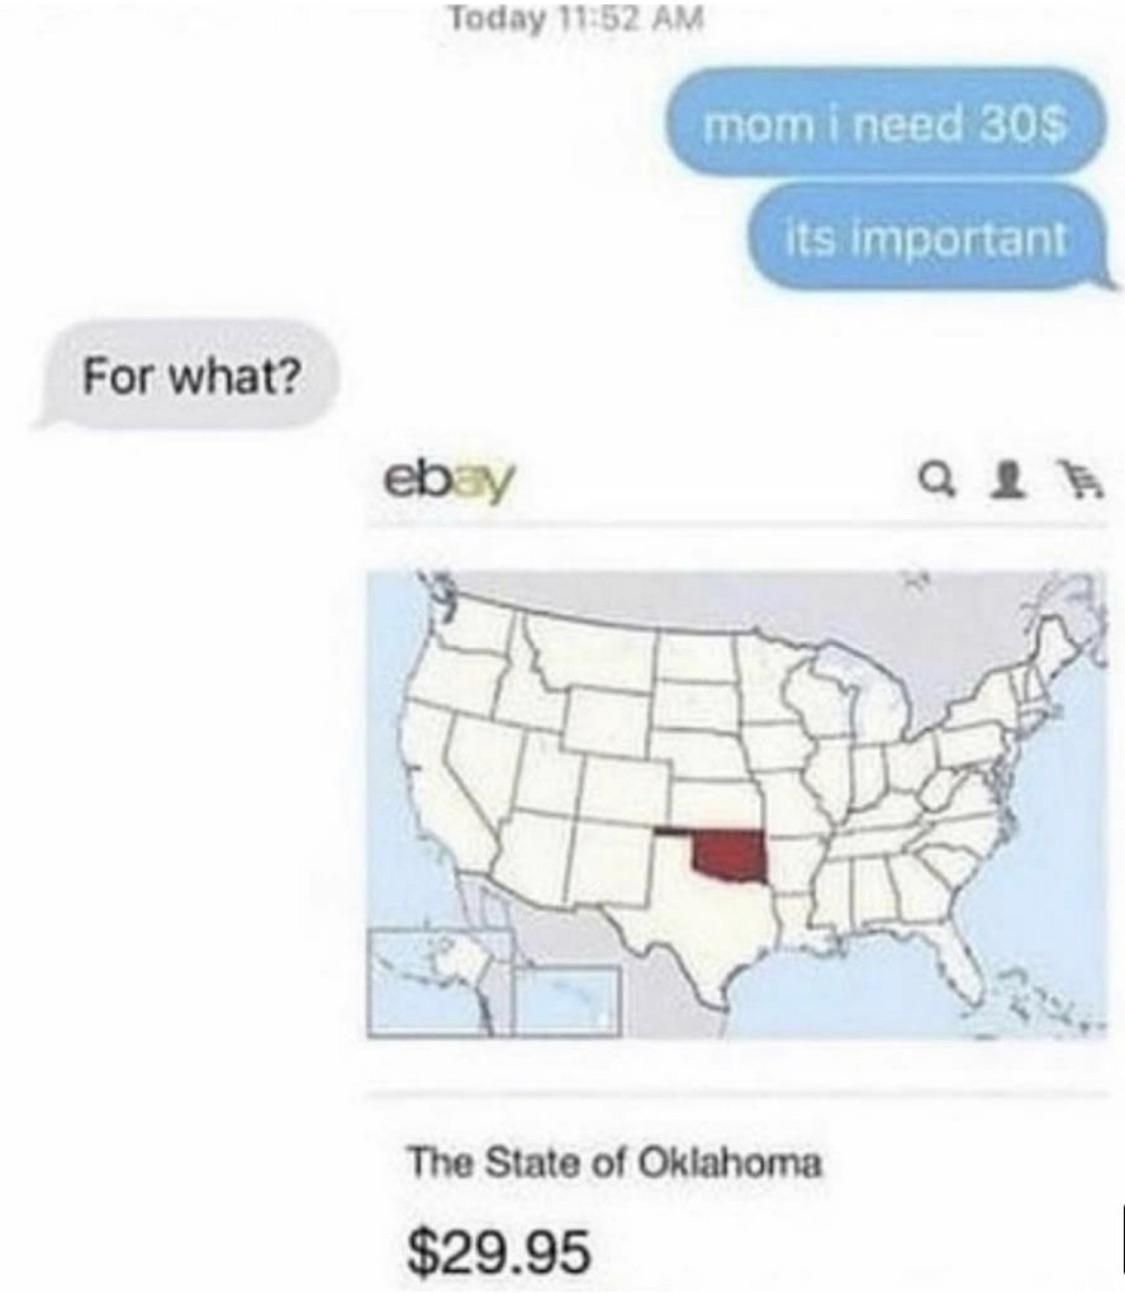 The Oklahoma purchase